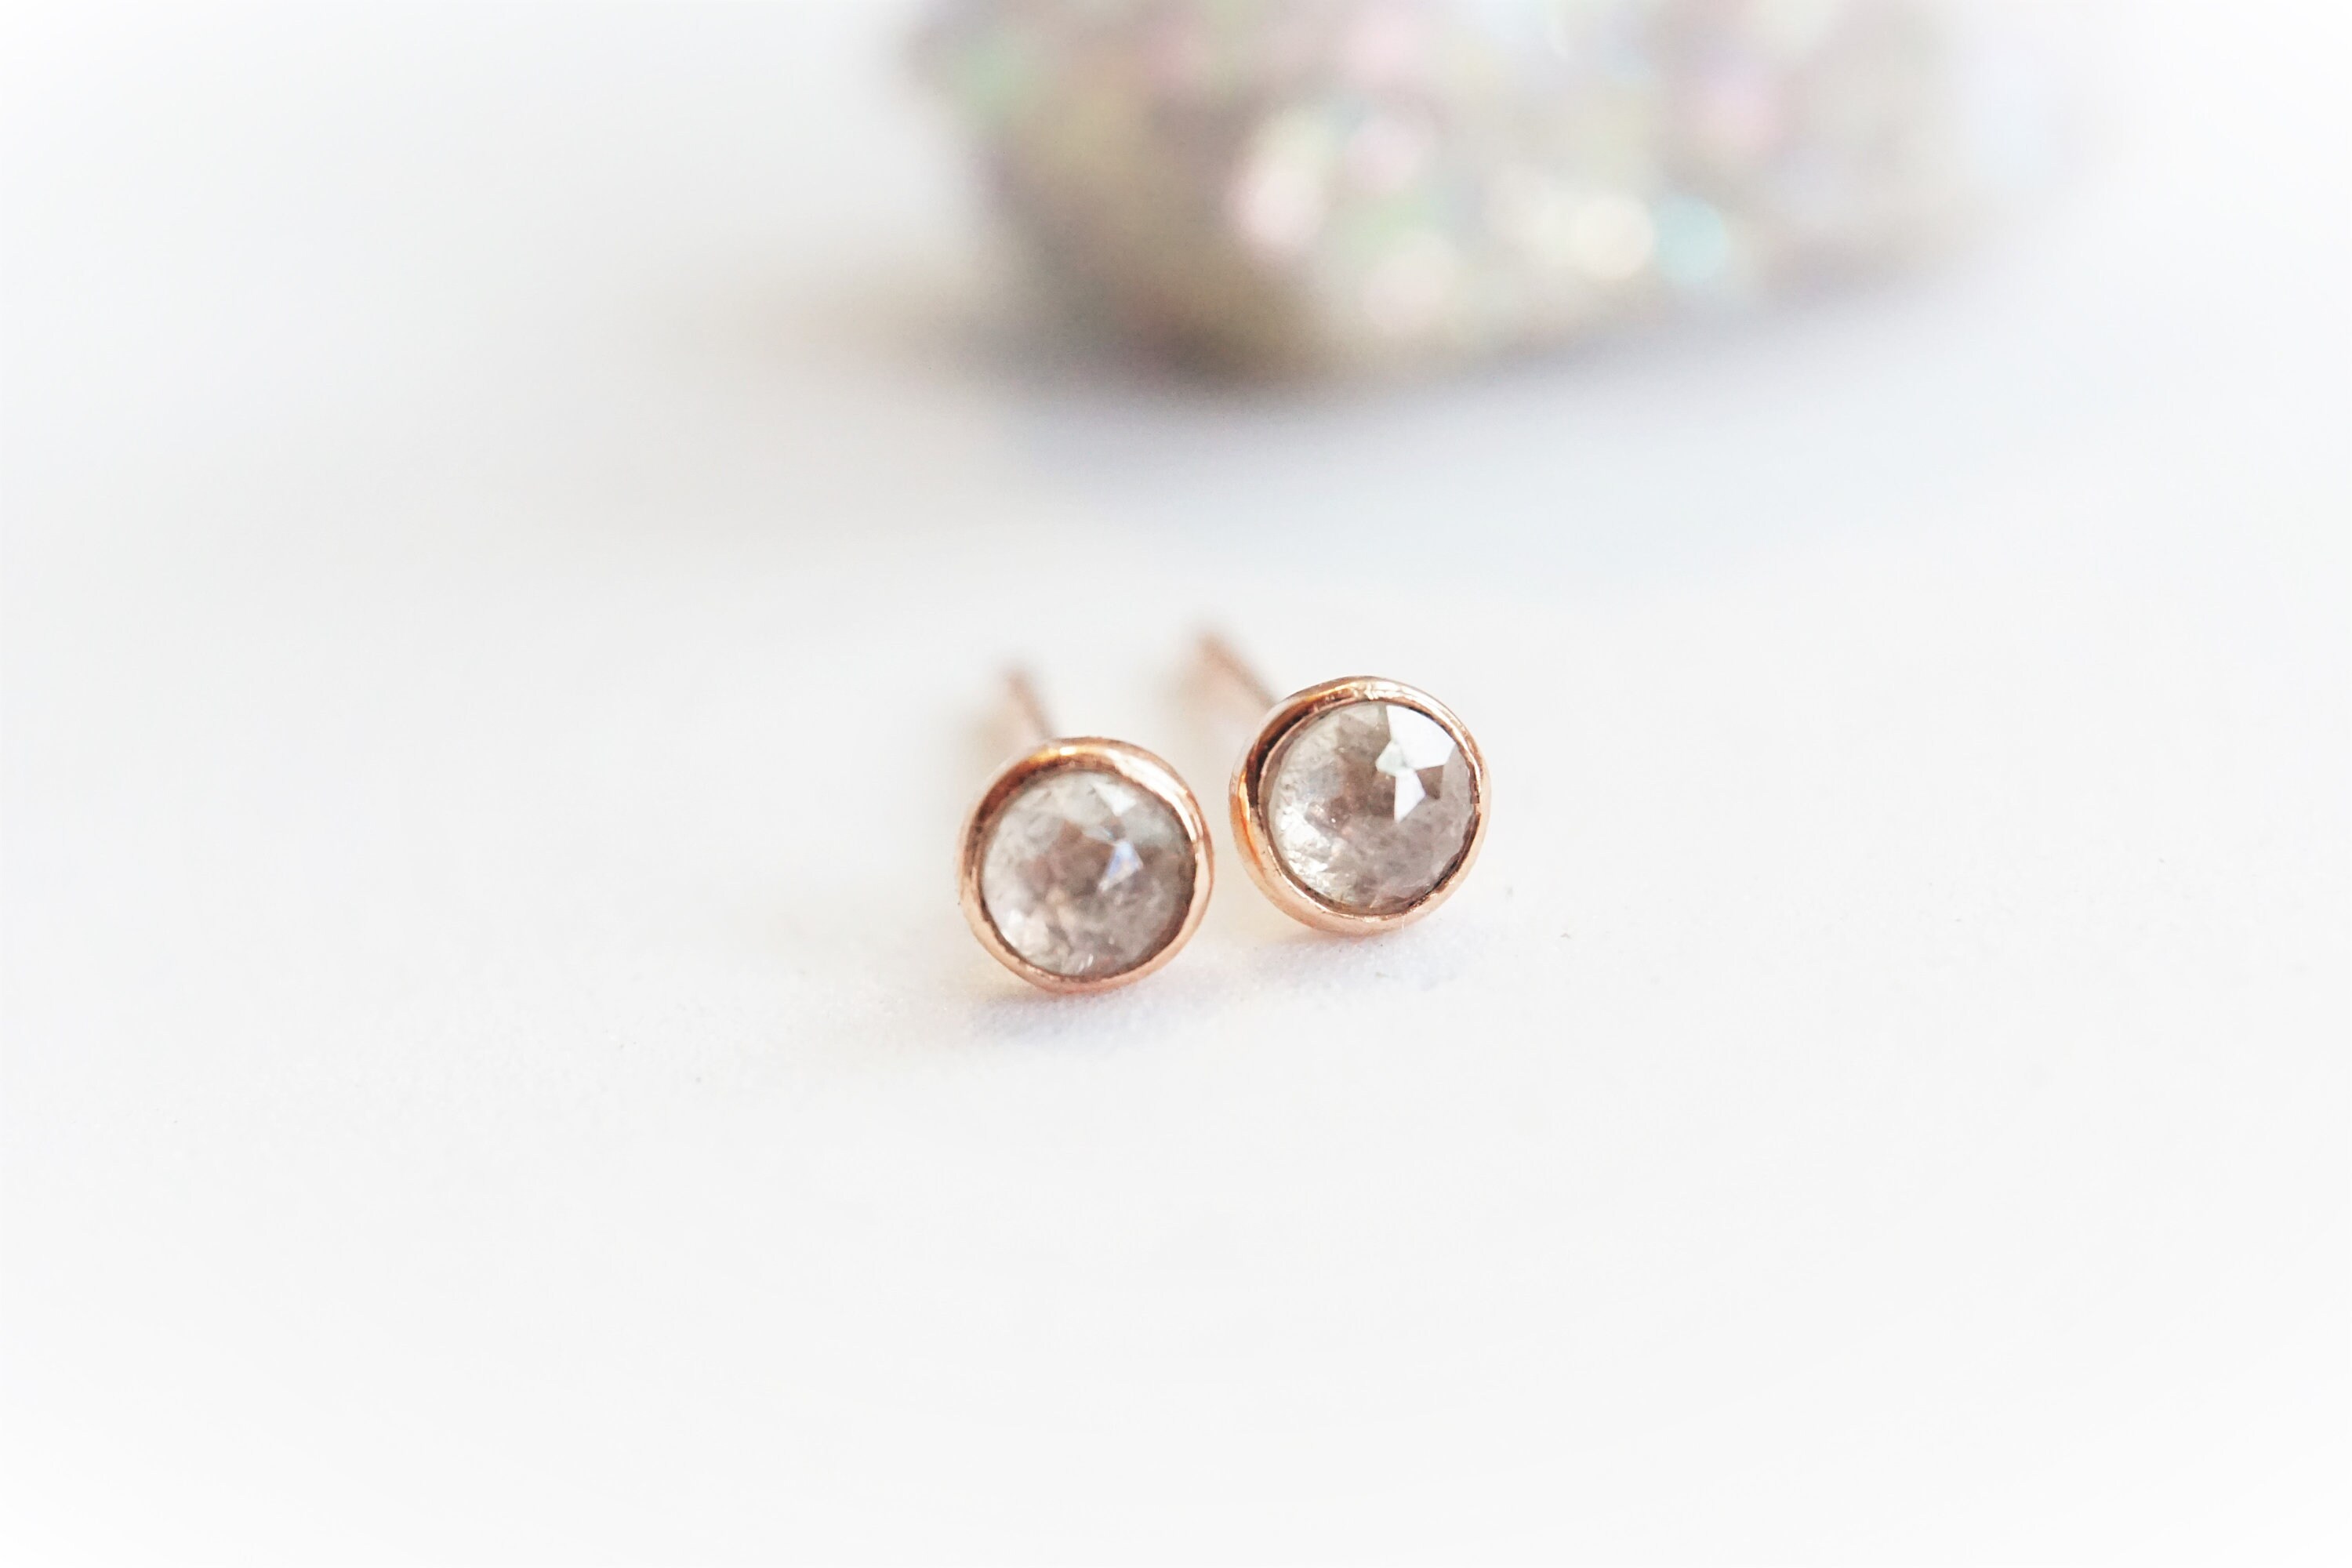 A pair of rustic Tiny 3 mm Rose cut Grey Diamond Stud Earrings | Etsy